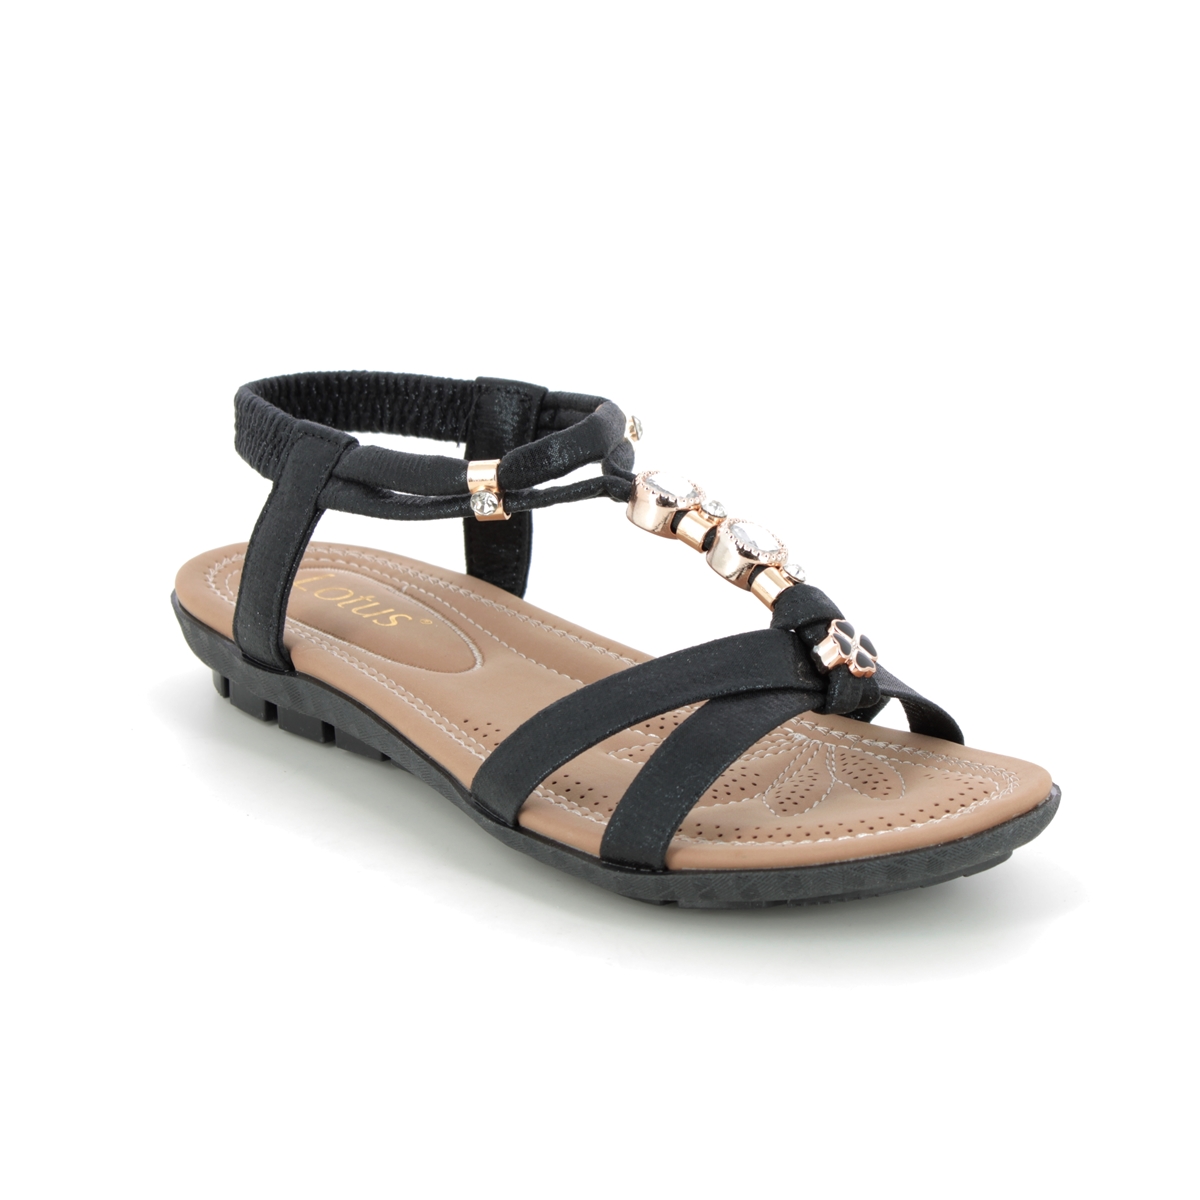 Lotus Bettina Margarita Black Womens Flat Sandals in a Plain  in Size 8